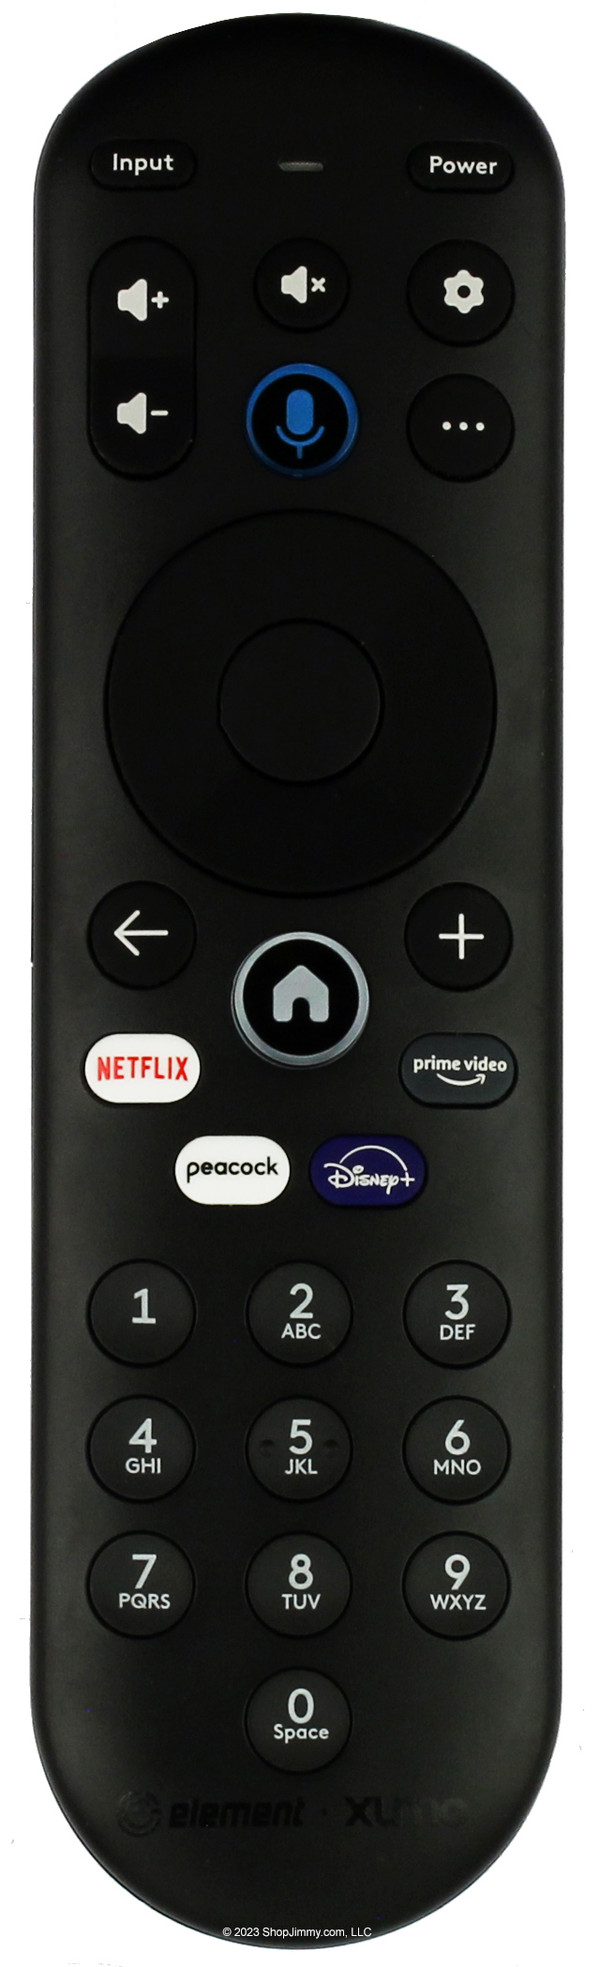 Element R34010BA00-00002 Remote Control w/ Netflix Peacock Disney+ --OPEN BAG